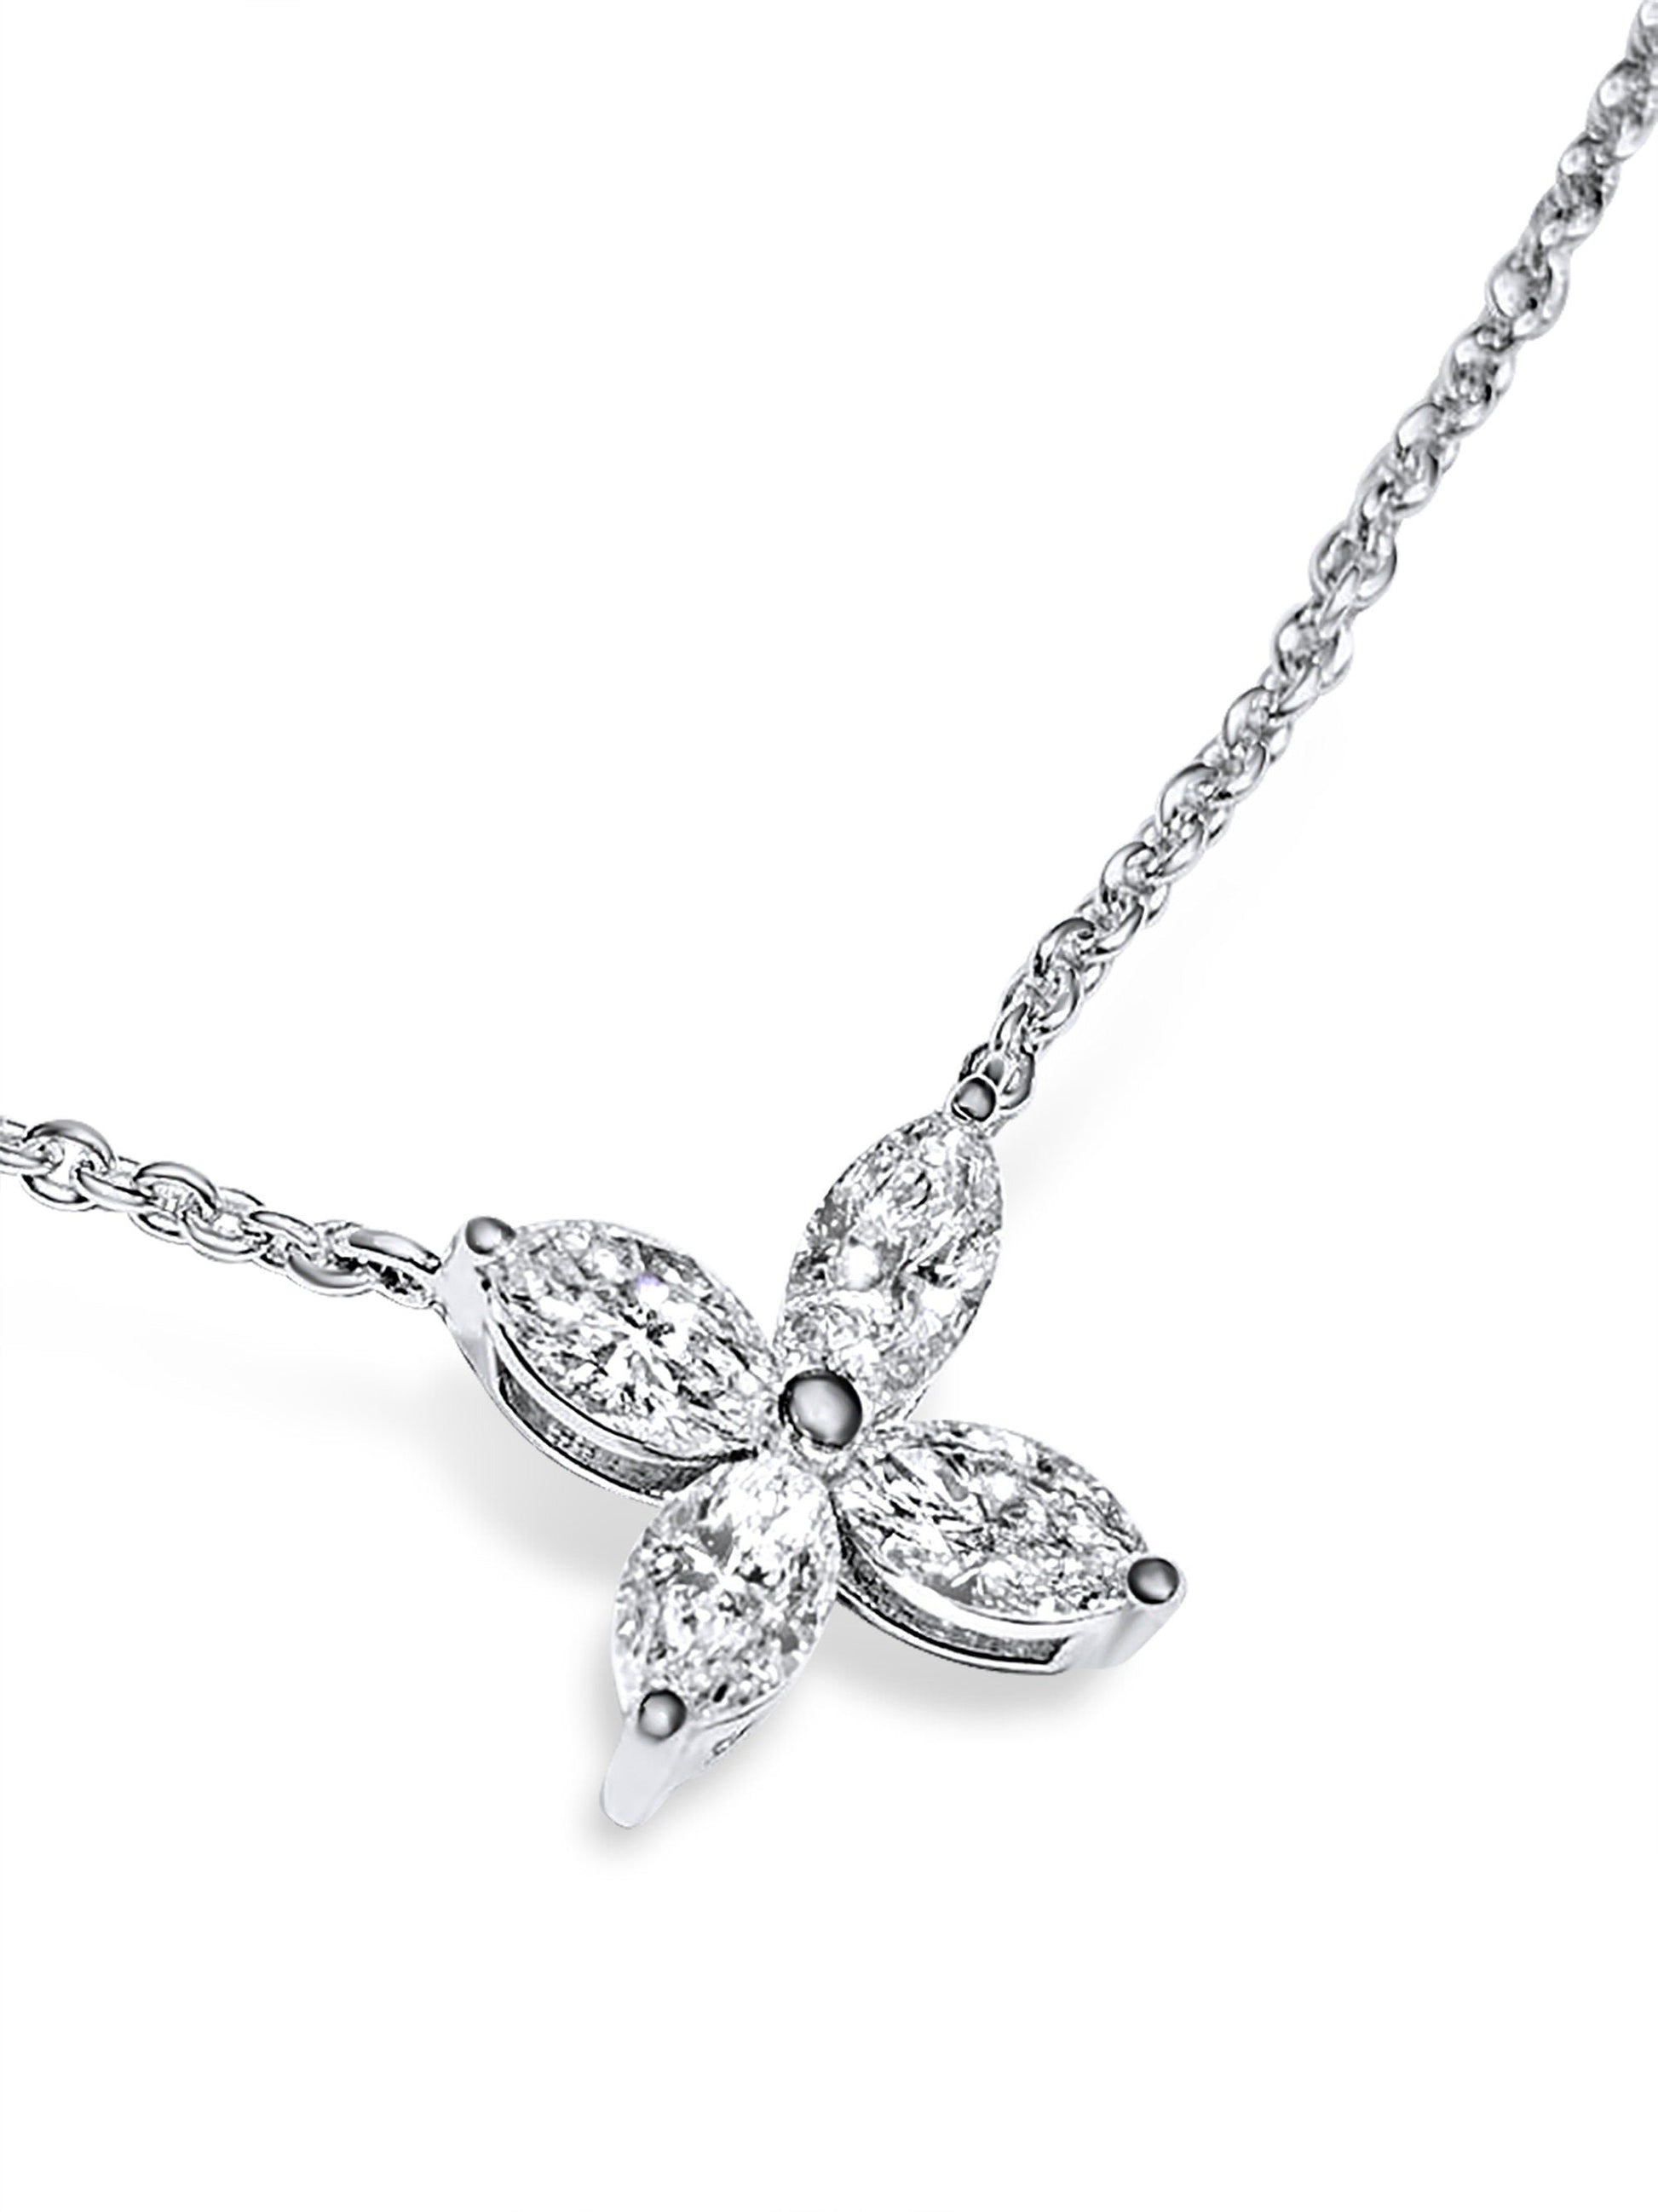 Marquise Diamond Pendant, 0.81ct 14k designer style Necklace Jewelry Flower Bloom Victoria